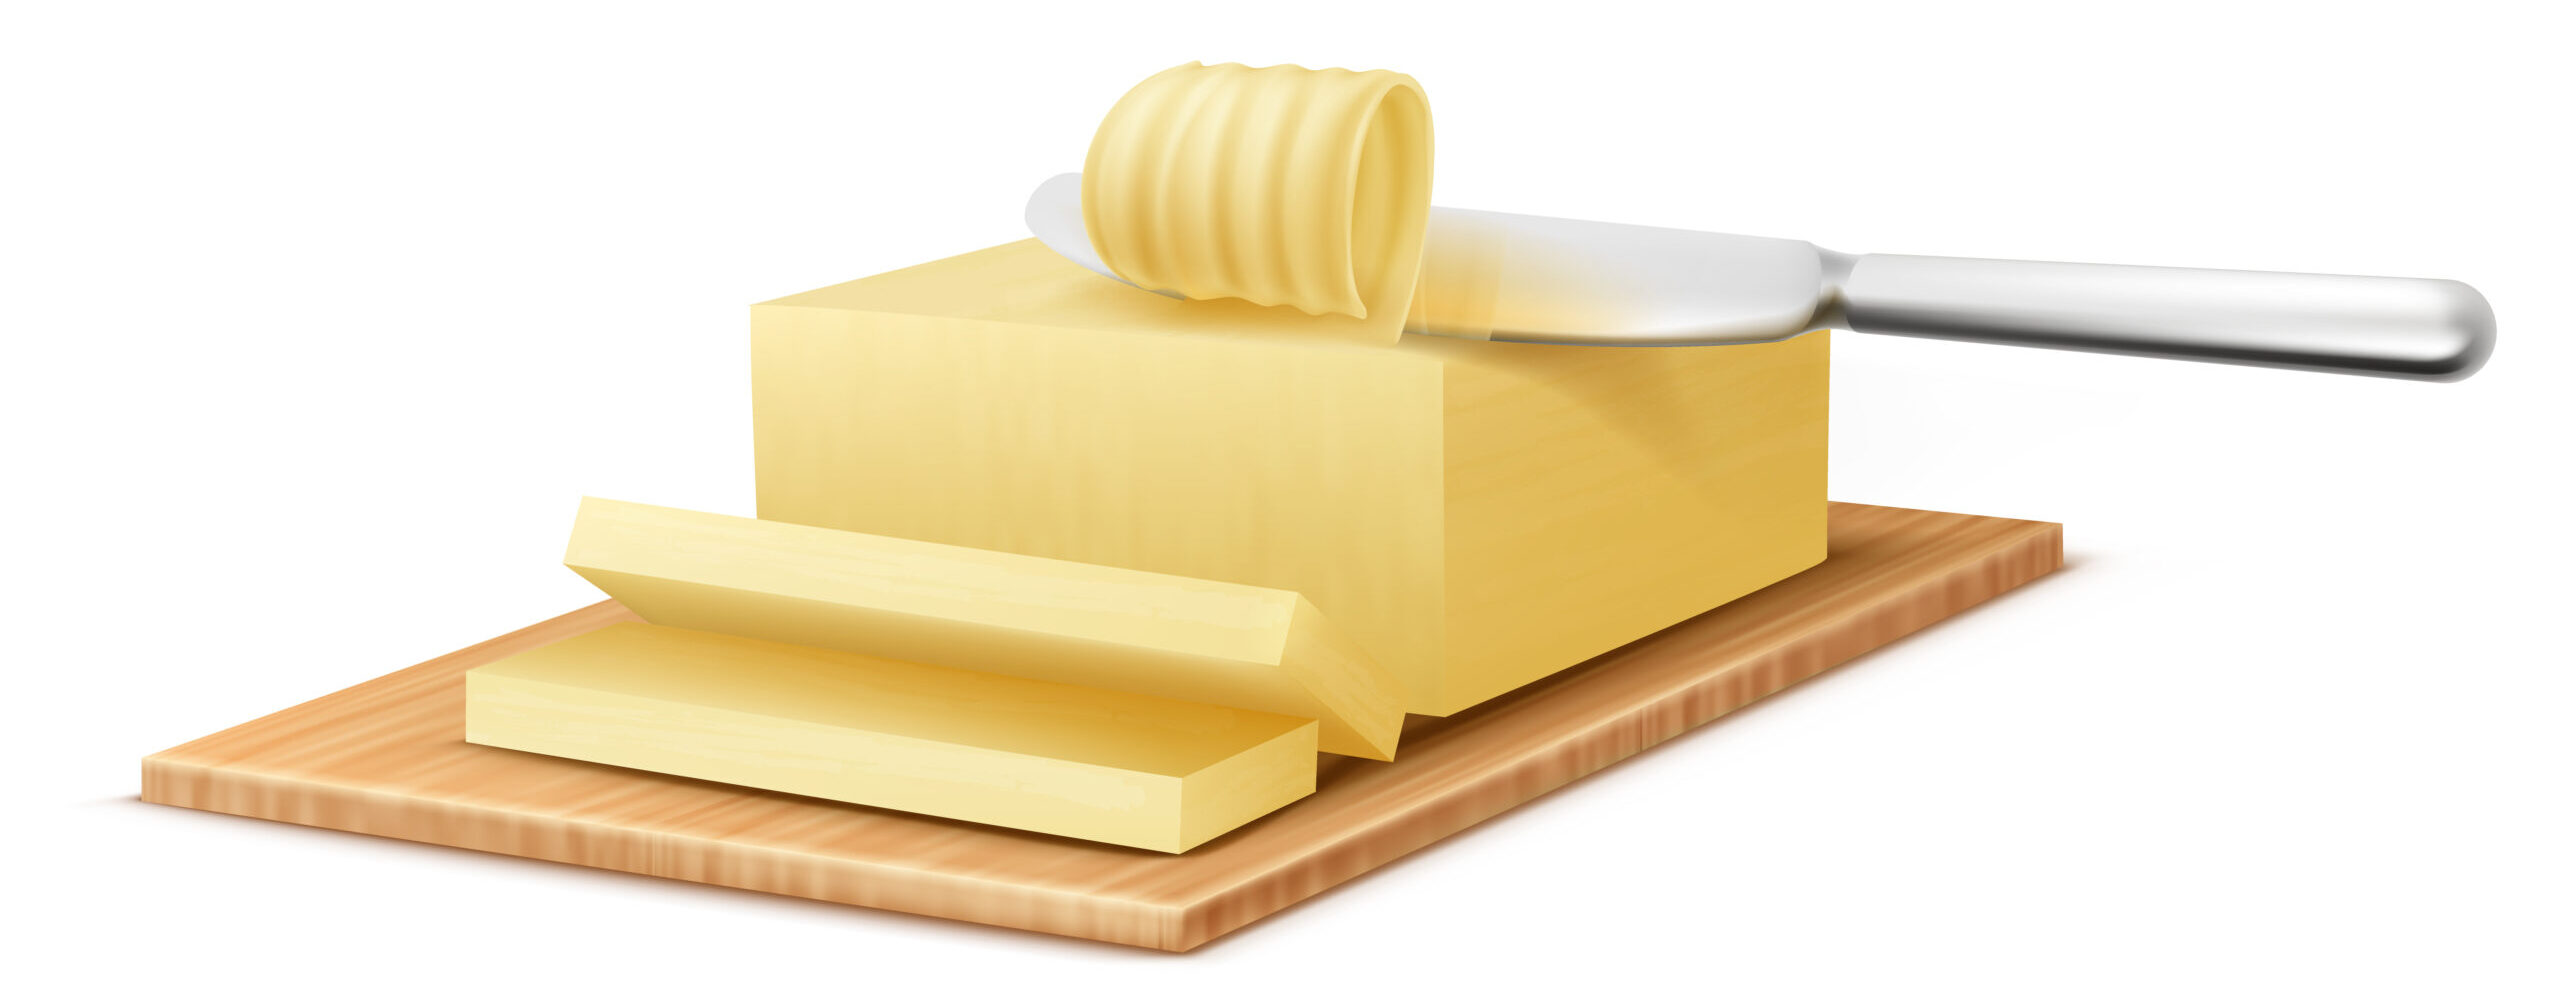 Healthful Wonders of Butter